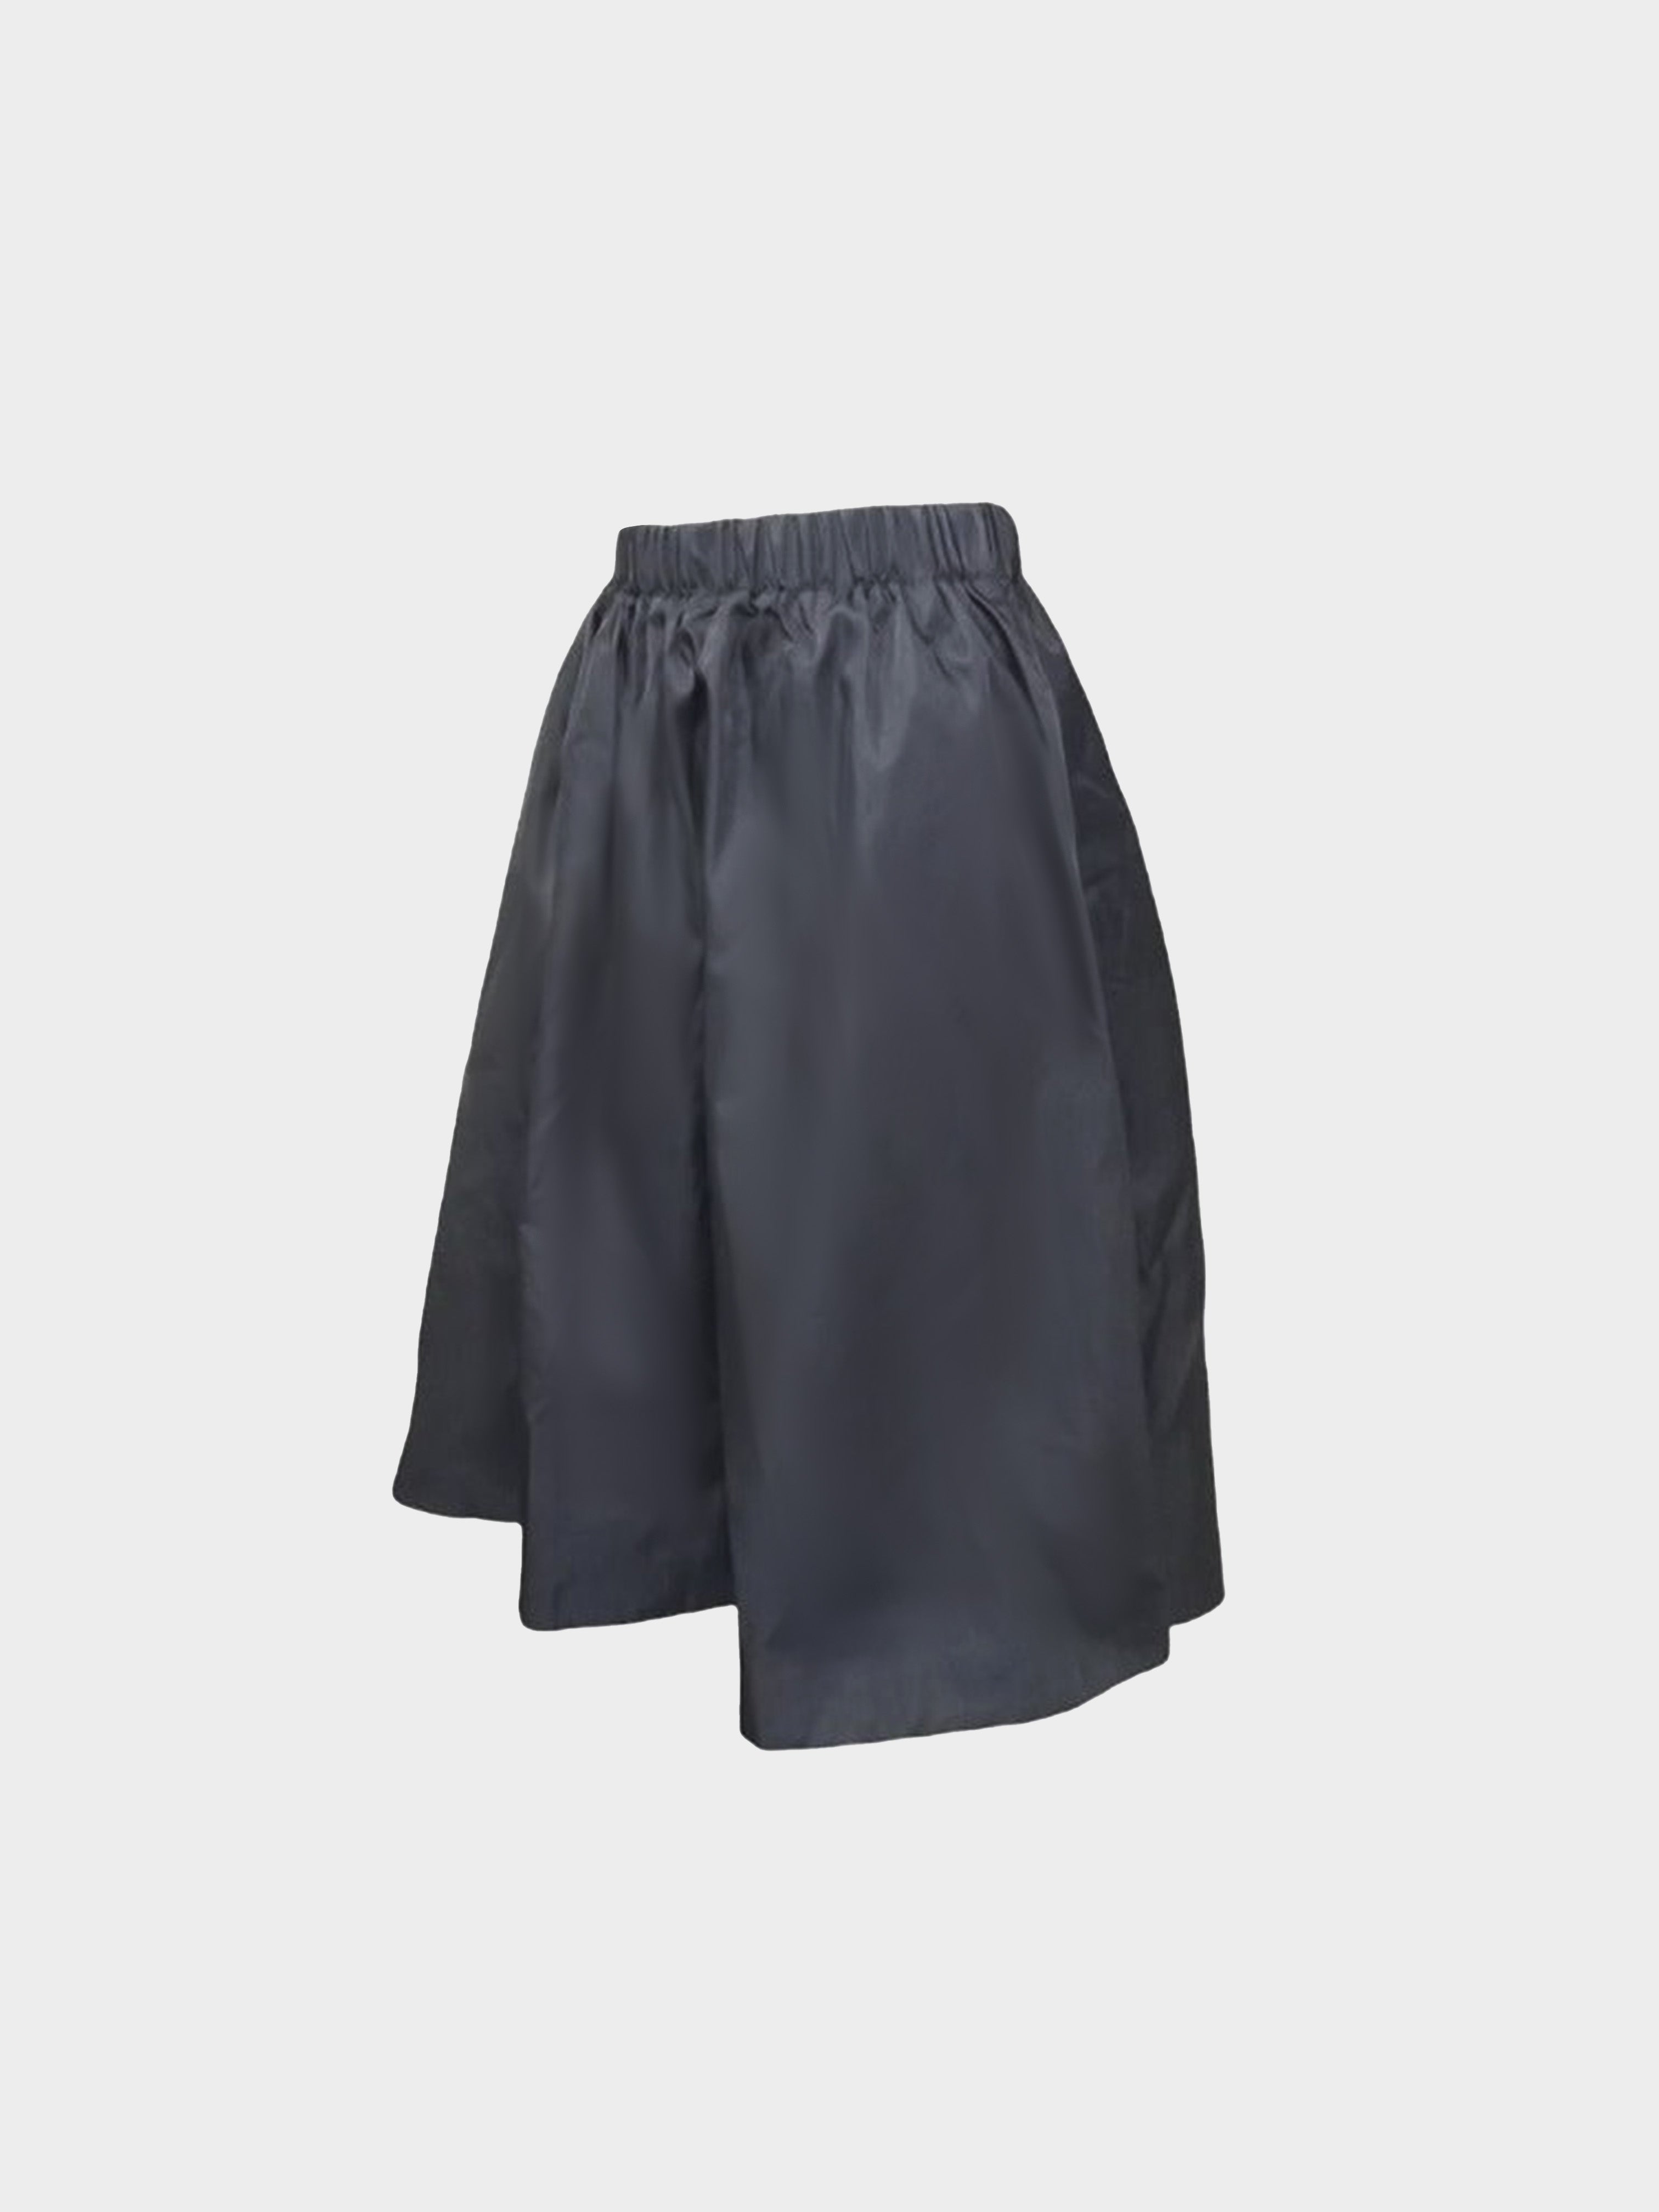 Prada Fall 2016 Black Puffy Gabardine Skirt